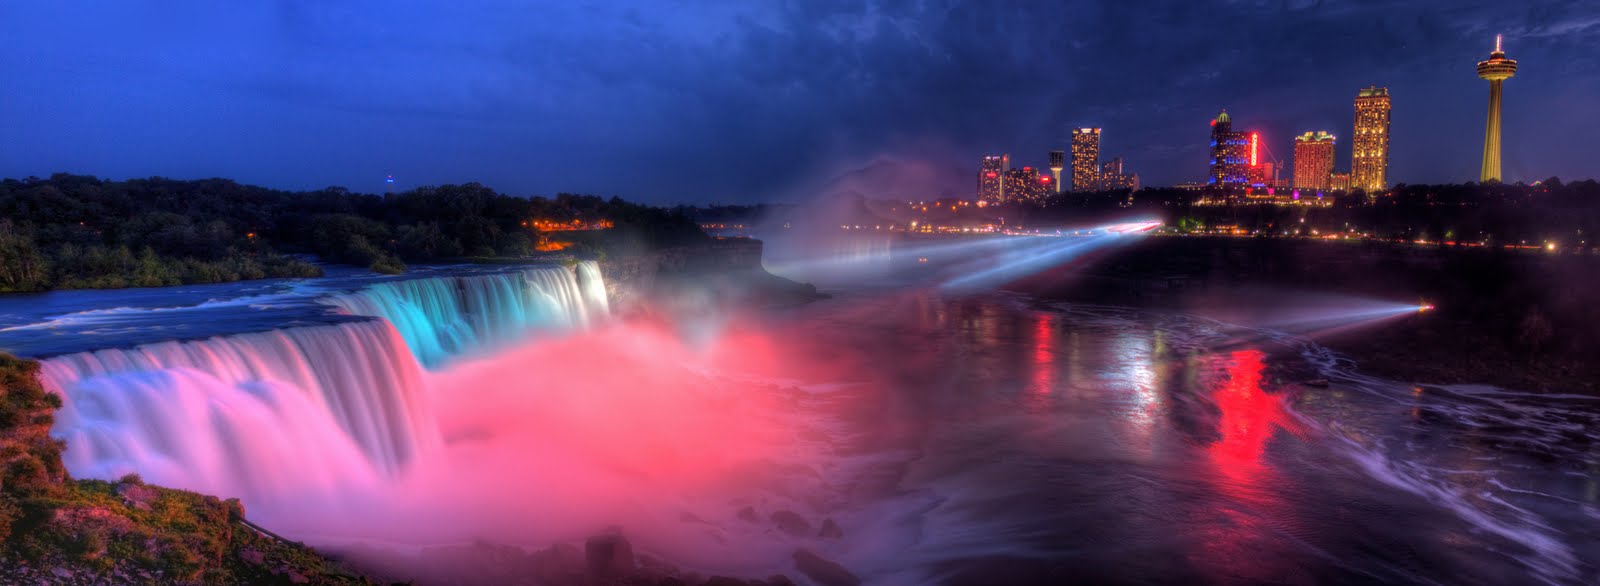  Niagara Falls